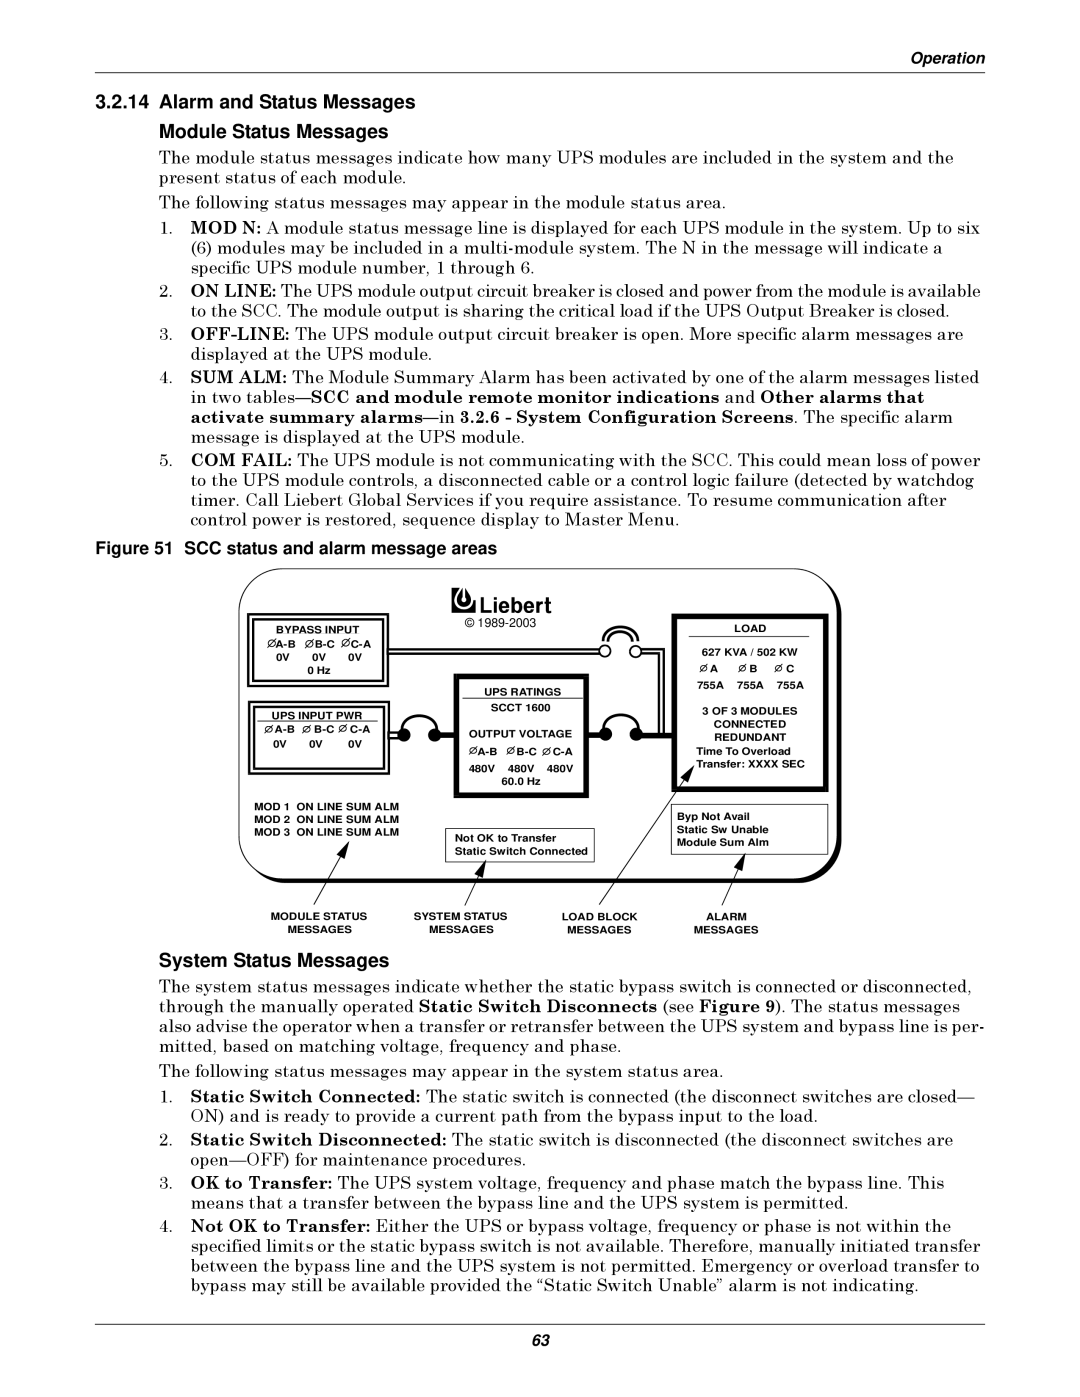 Emerson Series 610 manual Alarm and Status Messages Module Status Messages, System Status Messages 